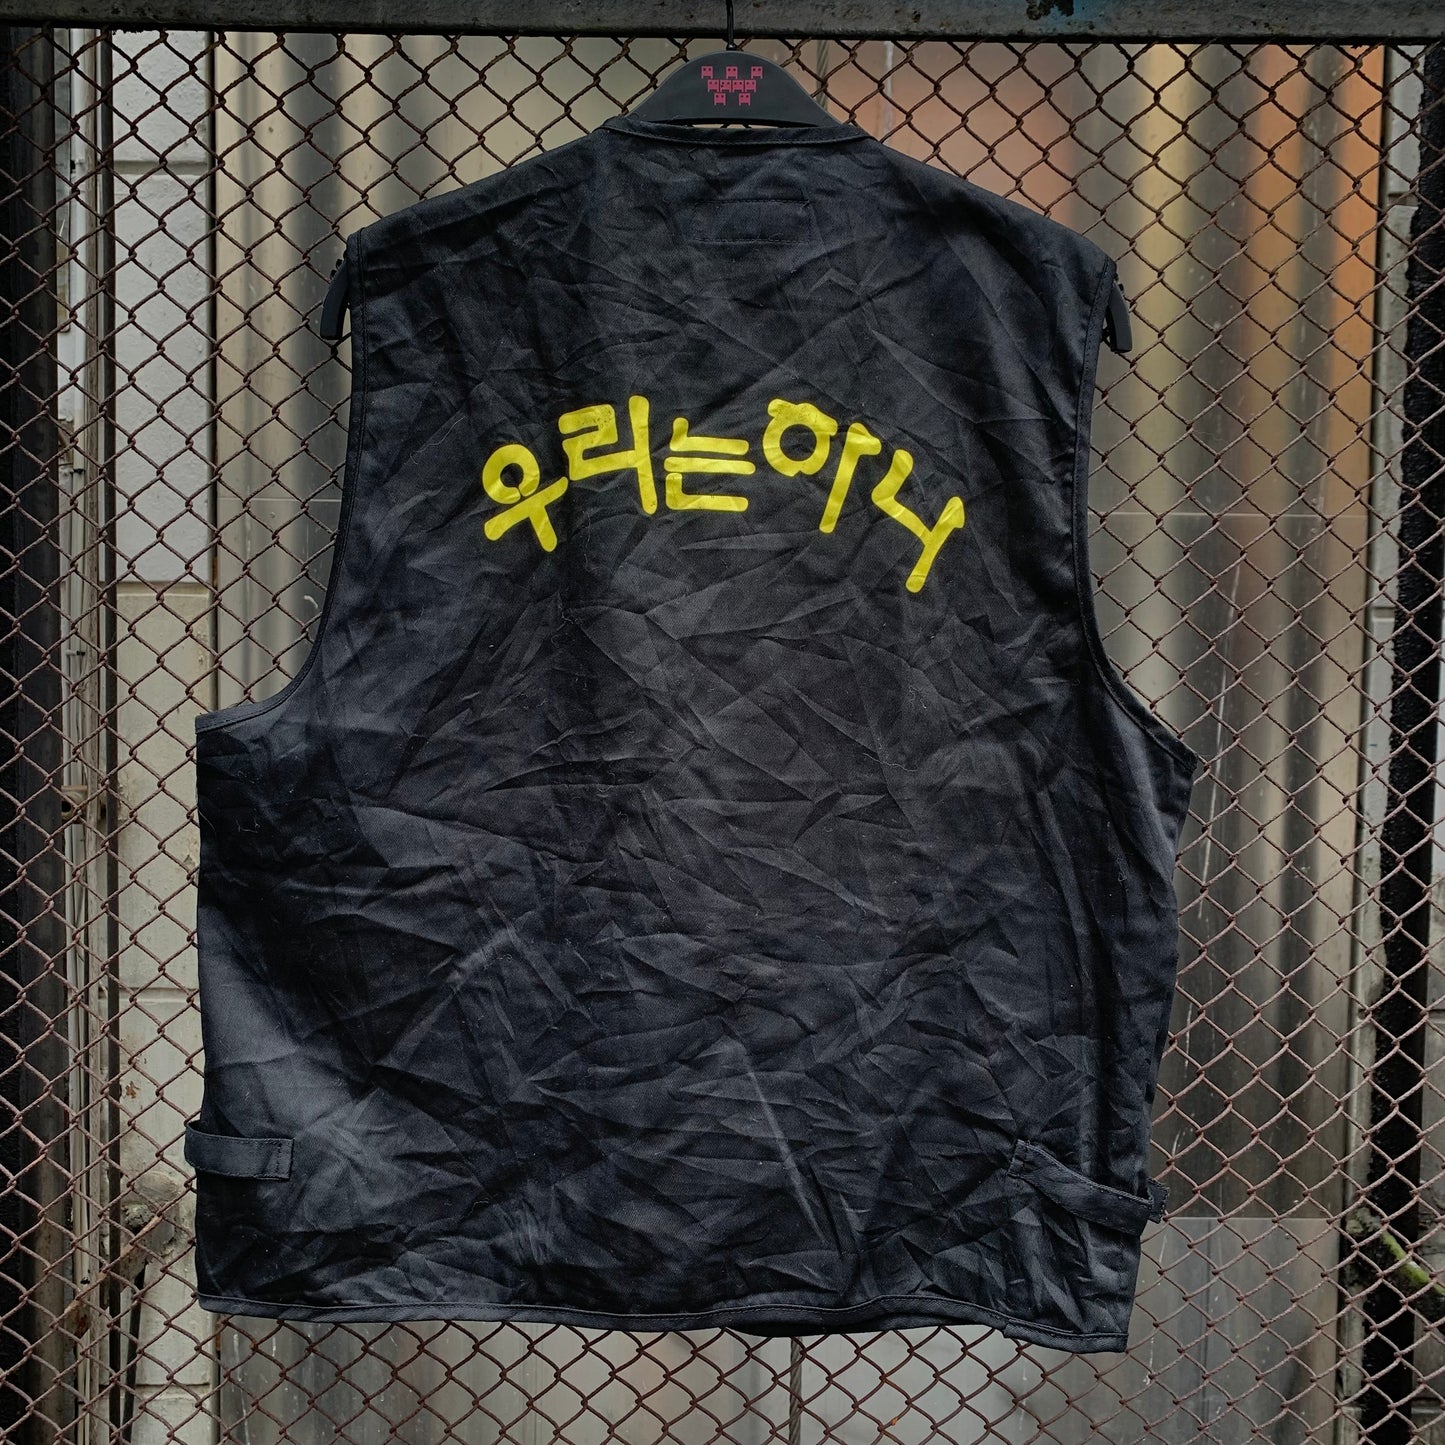 Korean Vest - Black. Yellow writting